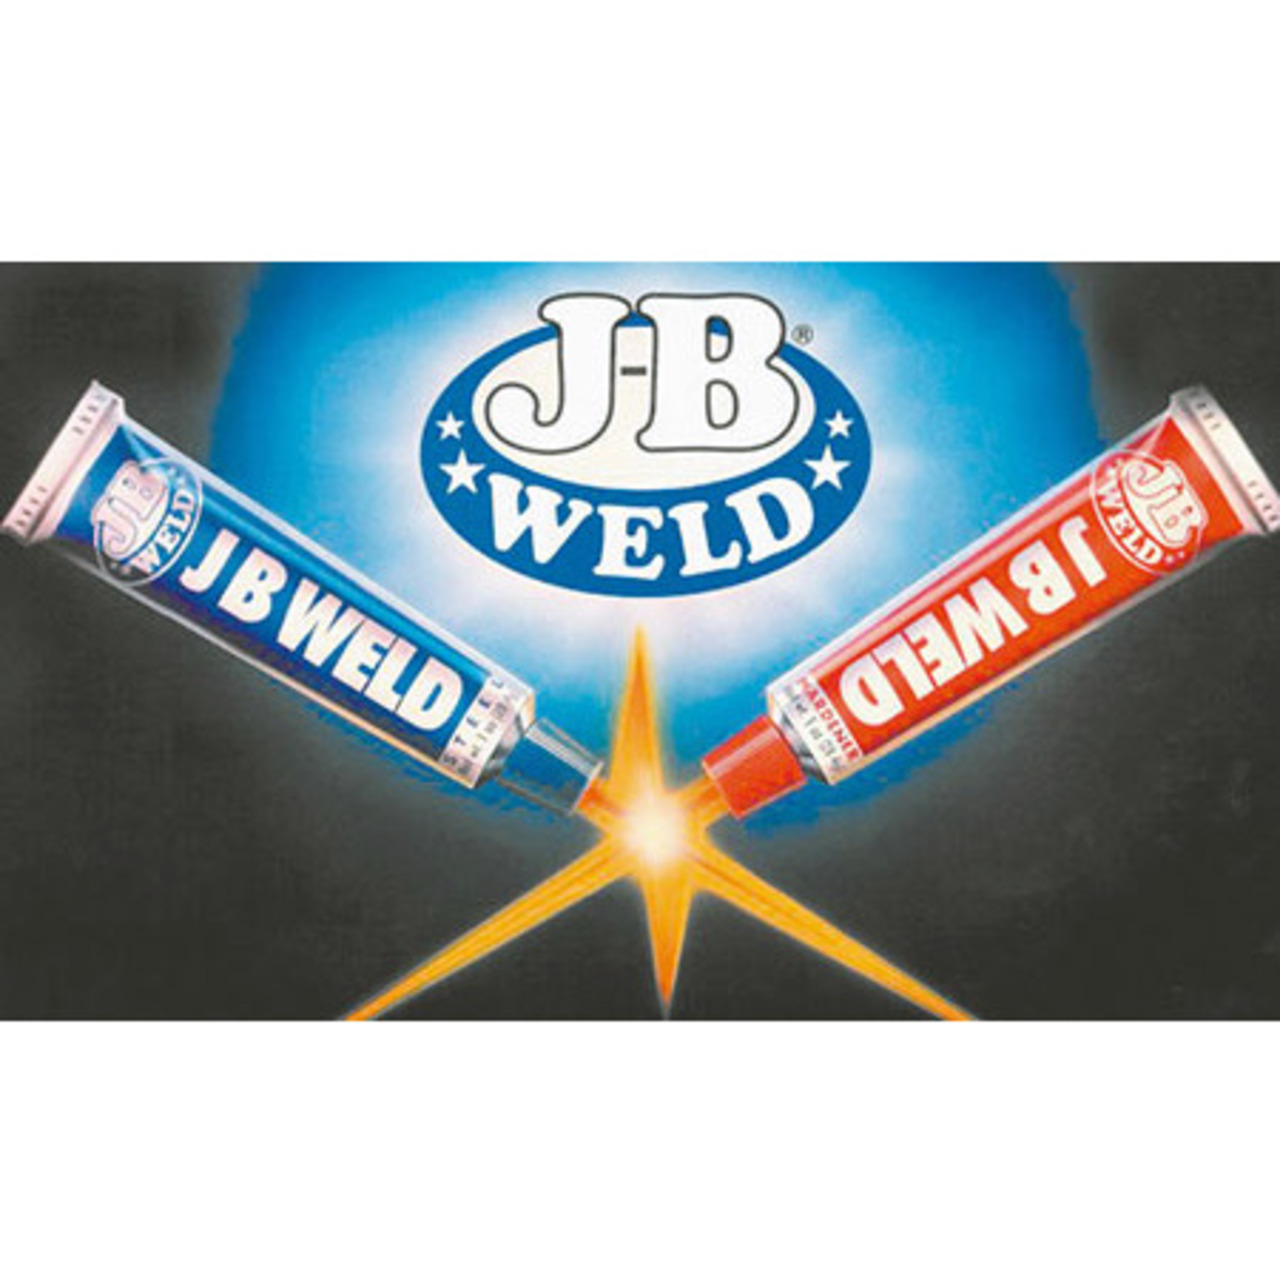 J-B Autoweld 2-Komponenten-Schweisskleber- 2x 28 g